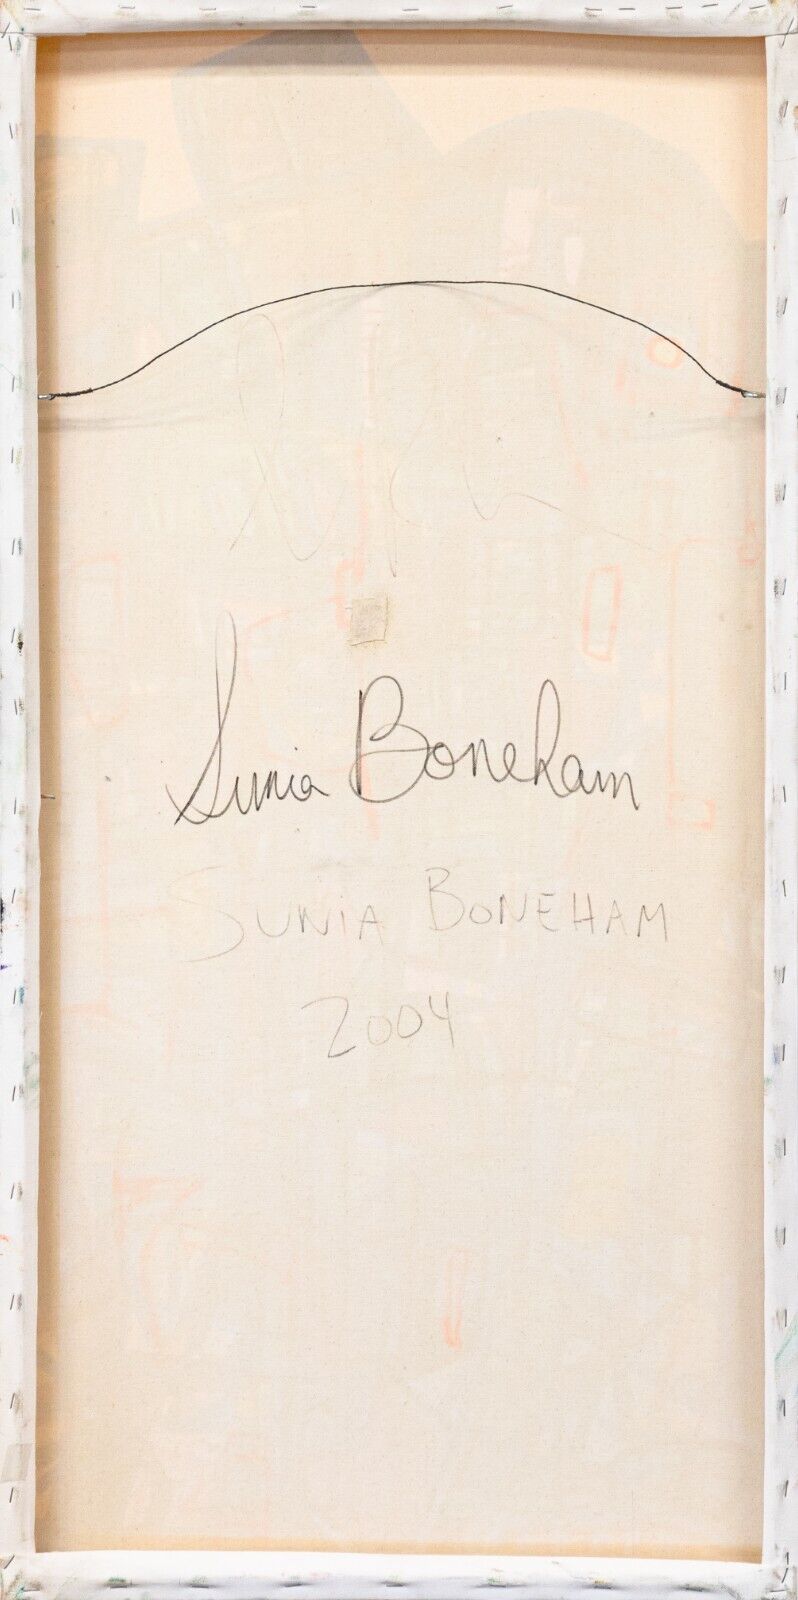 Sunia Boneham Morning Signed Contemporary Abstract Acrylic Painting Canvas 2004